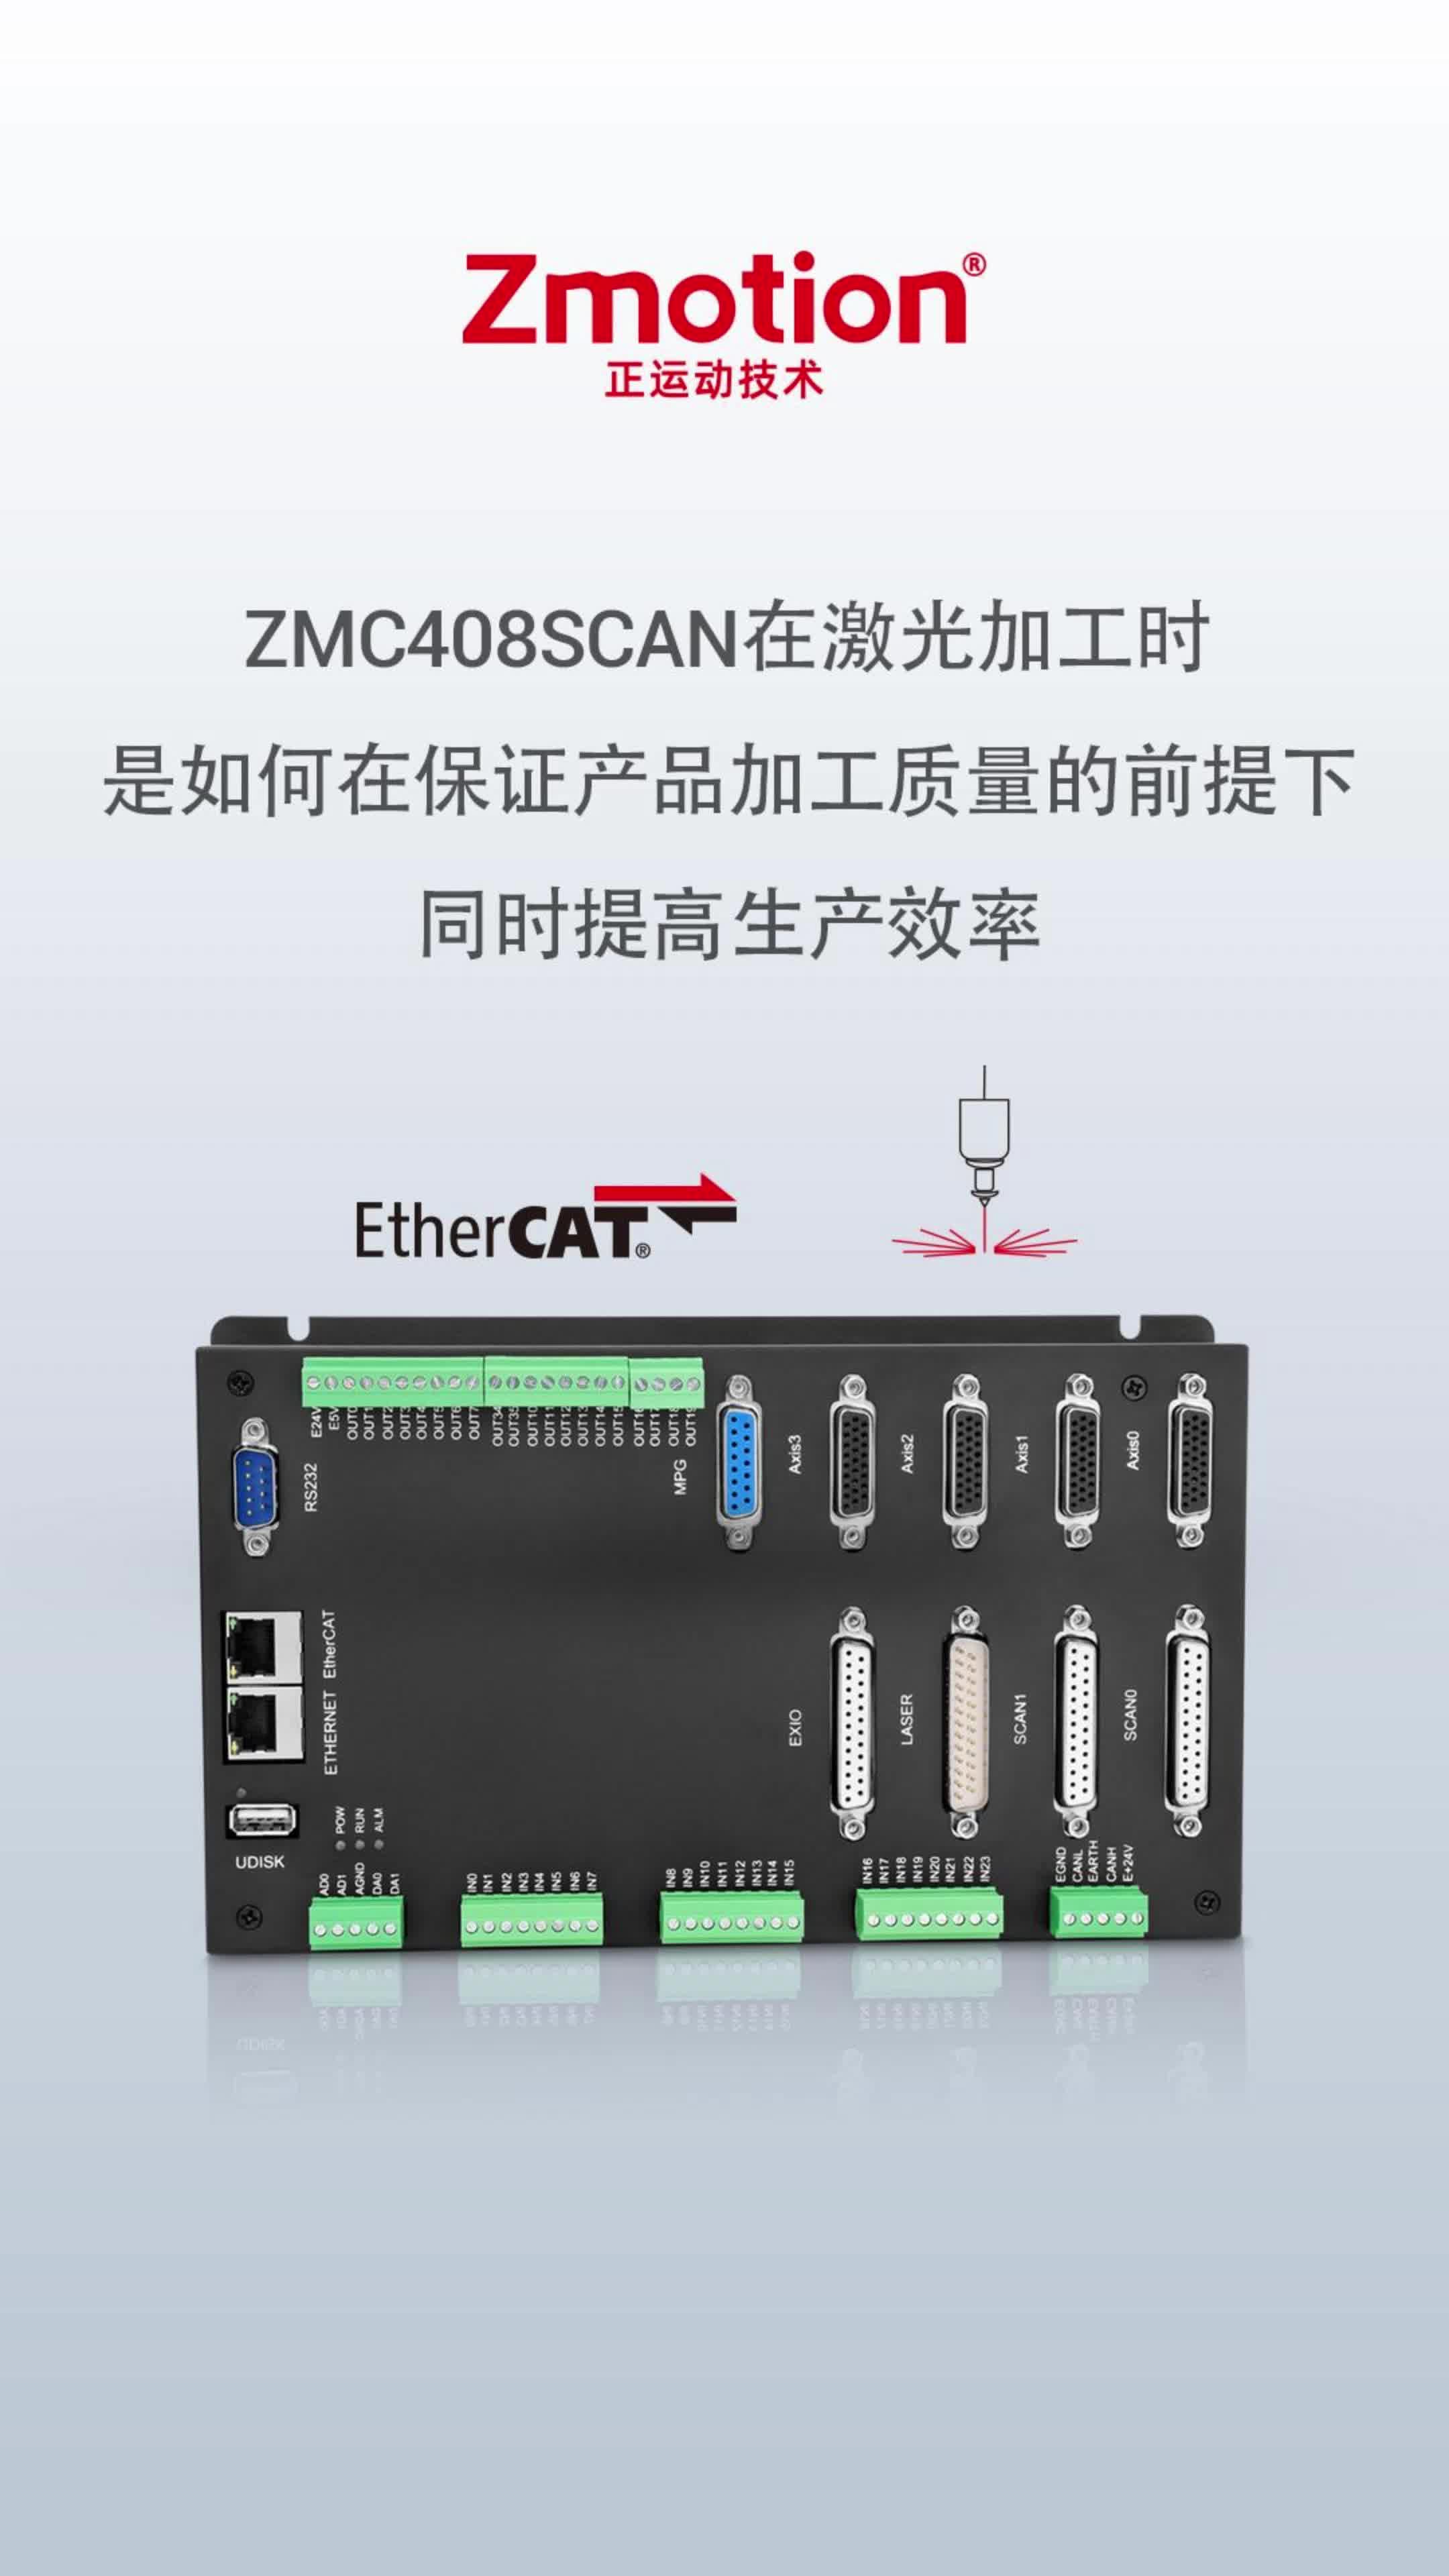 ZMC408SCAN高精度多軸聯合的同步激光加工控制提高產能# 運動控制器# EtherCAT運動控制# 激光